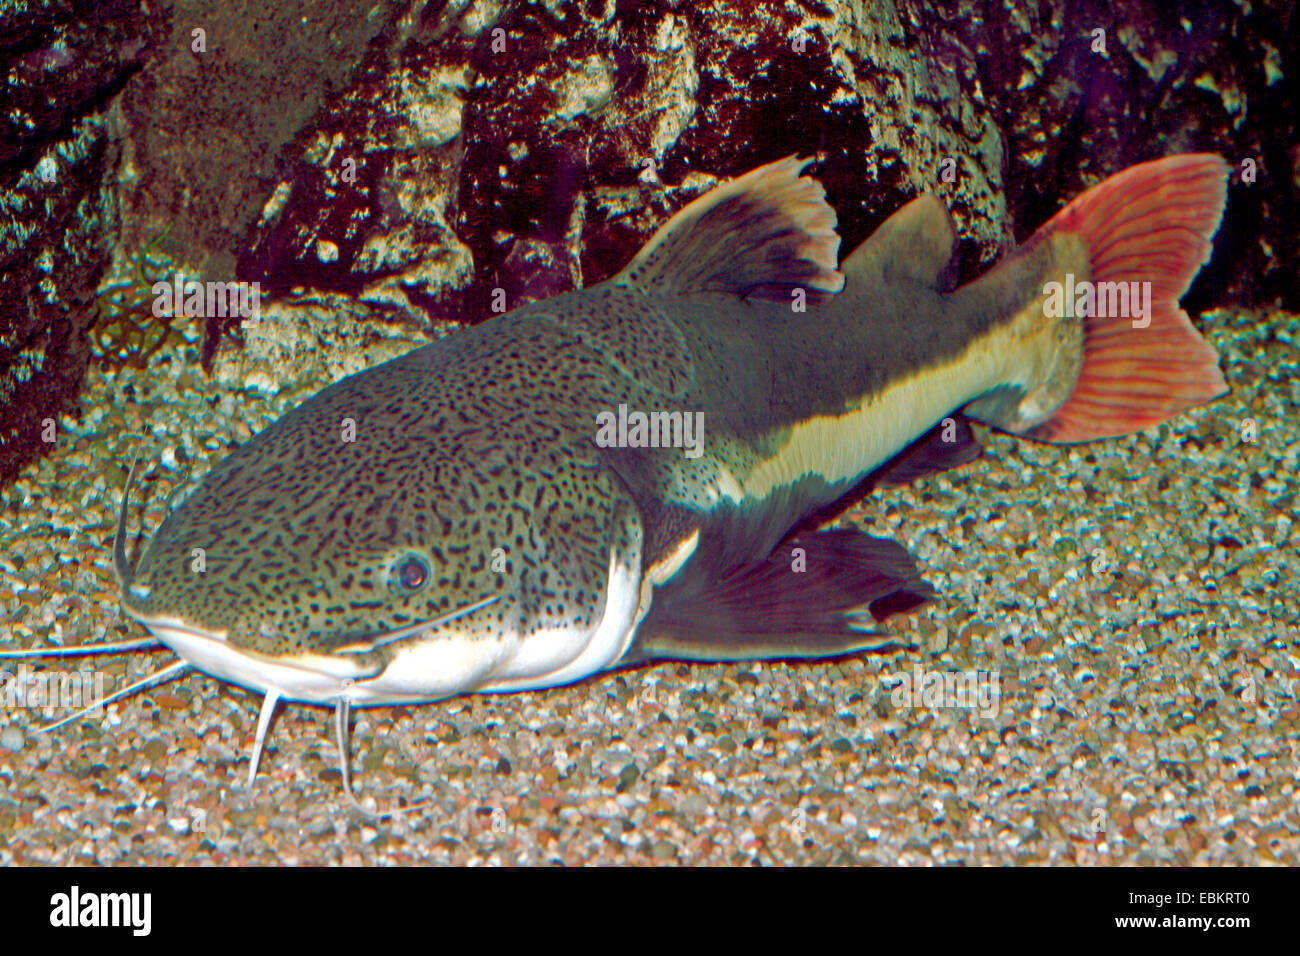 Giant redtailed catfish (Phractocephalus hemioliopterus), on the ground Stock Photo